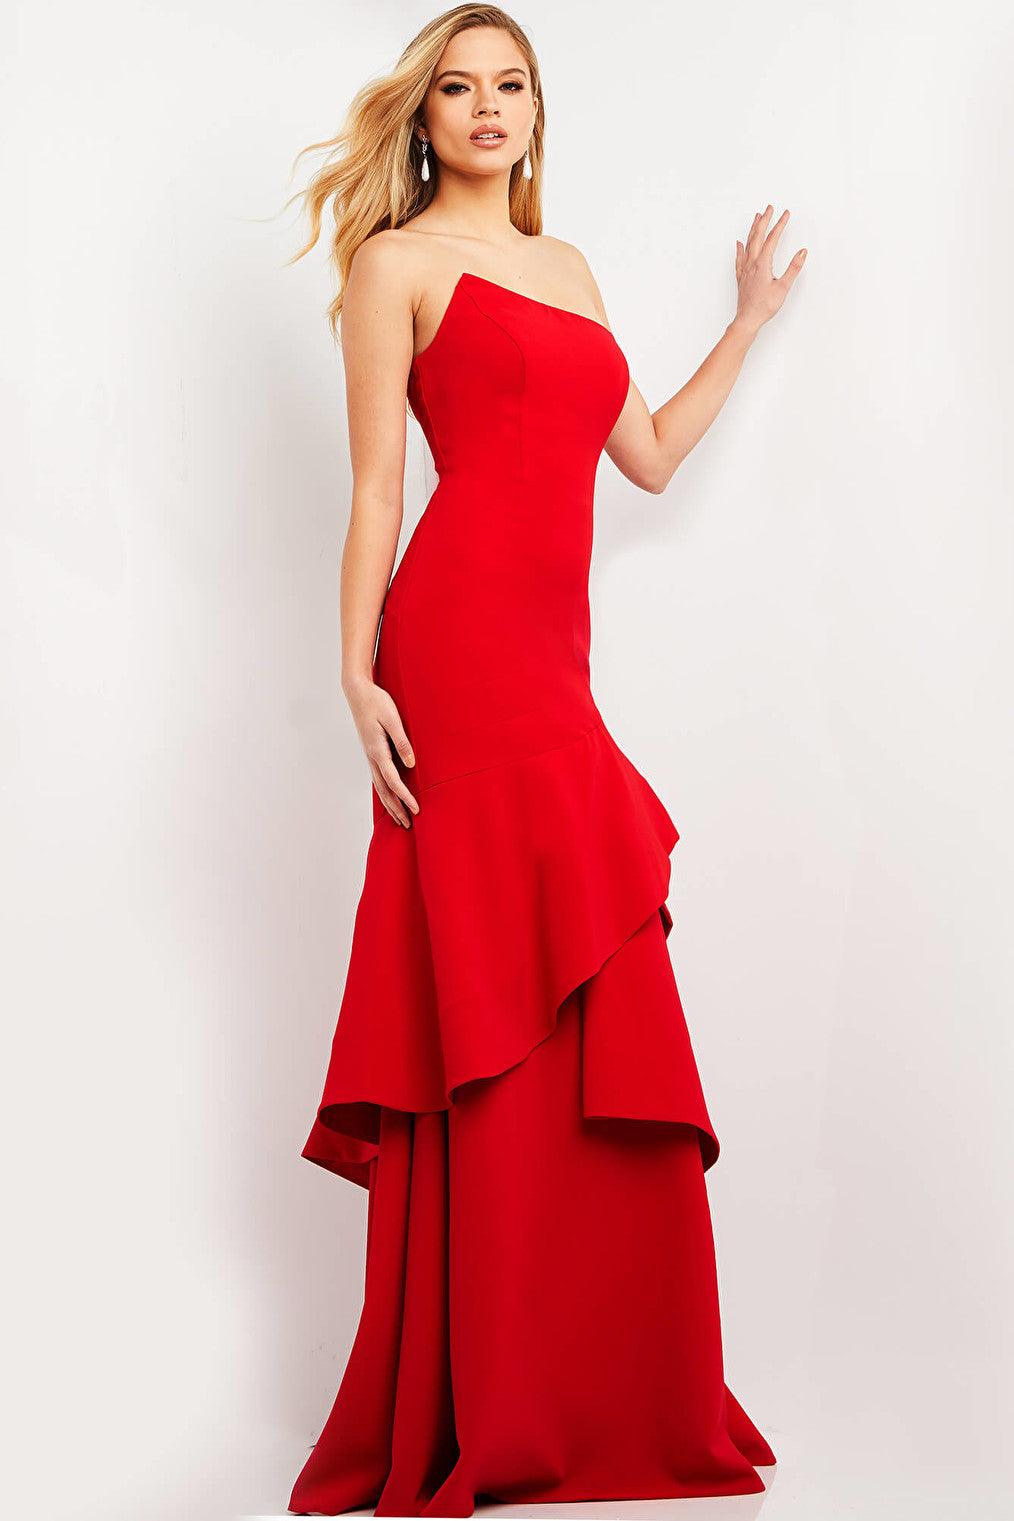 Red strapless Jovani evening dress 06509